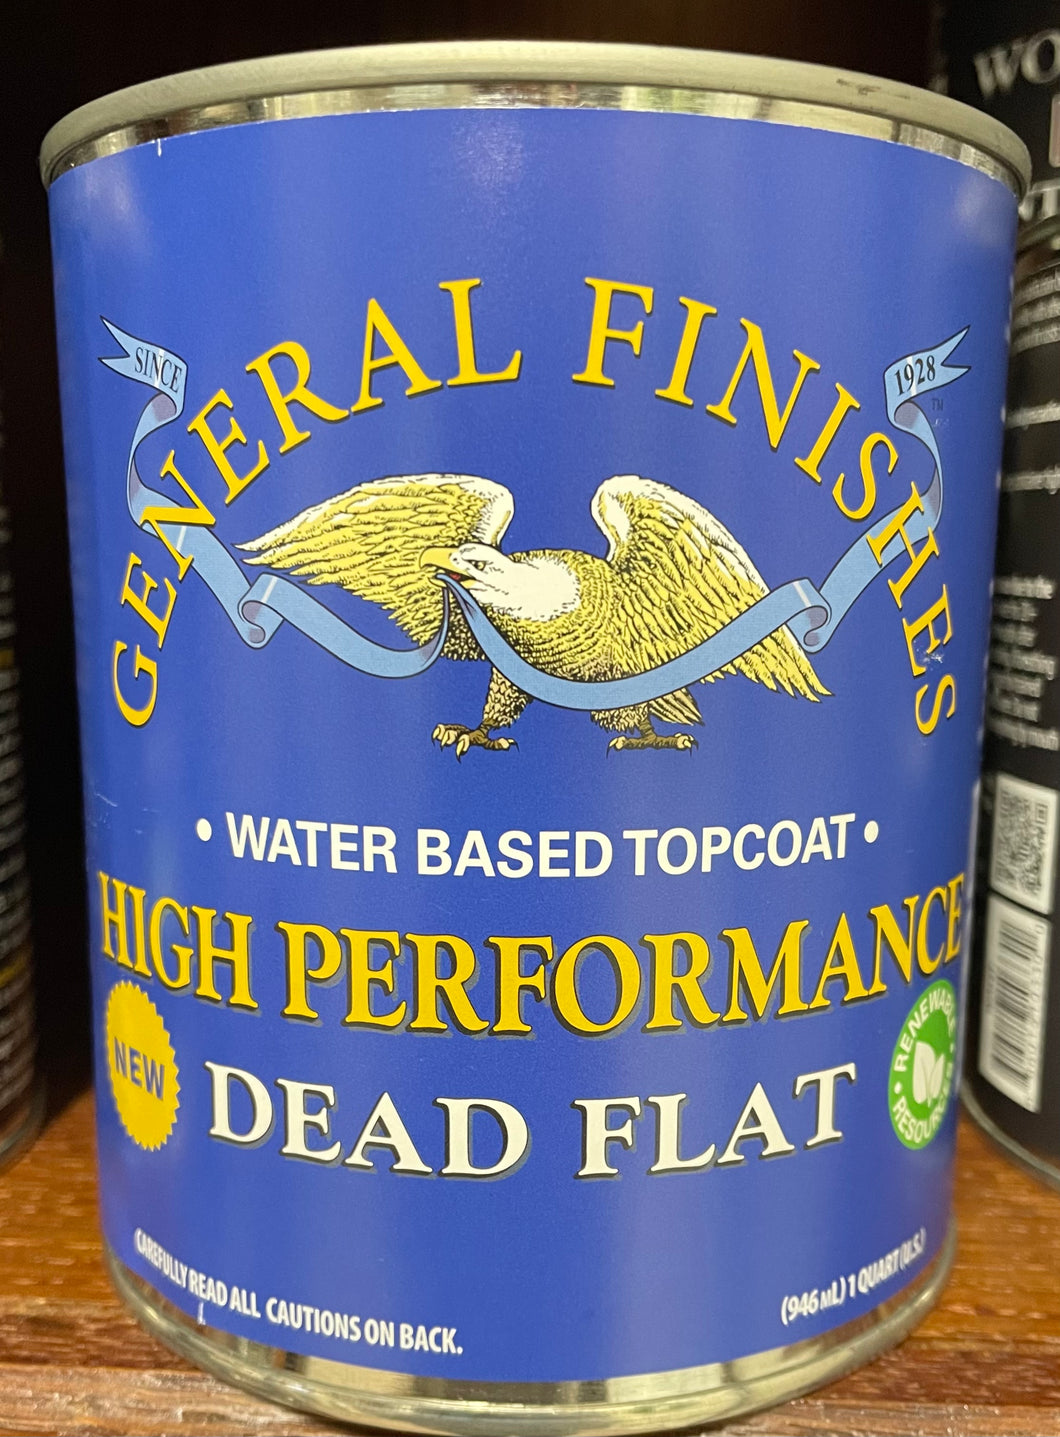 General Finishes High Performance Dead Flat Quart